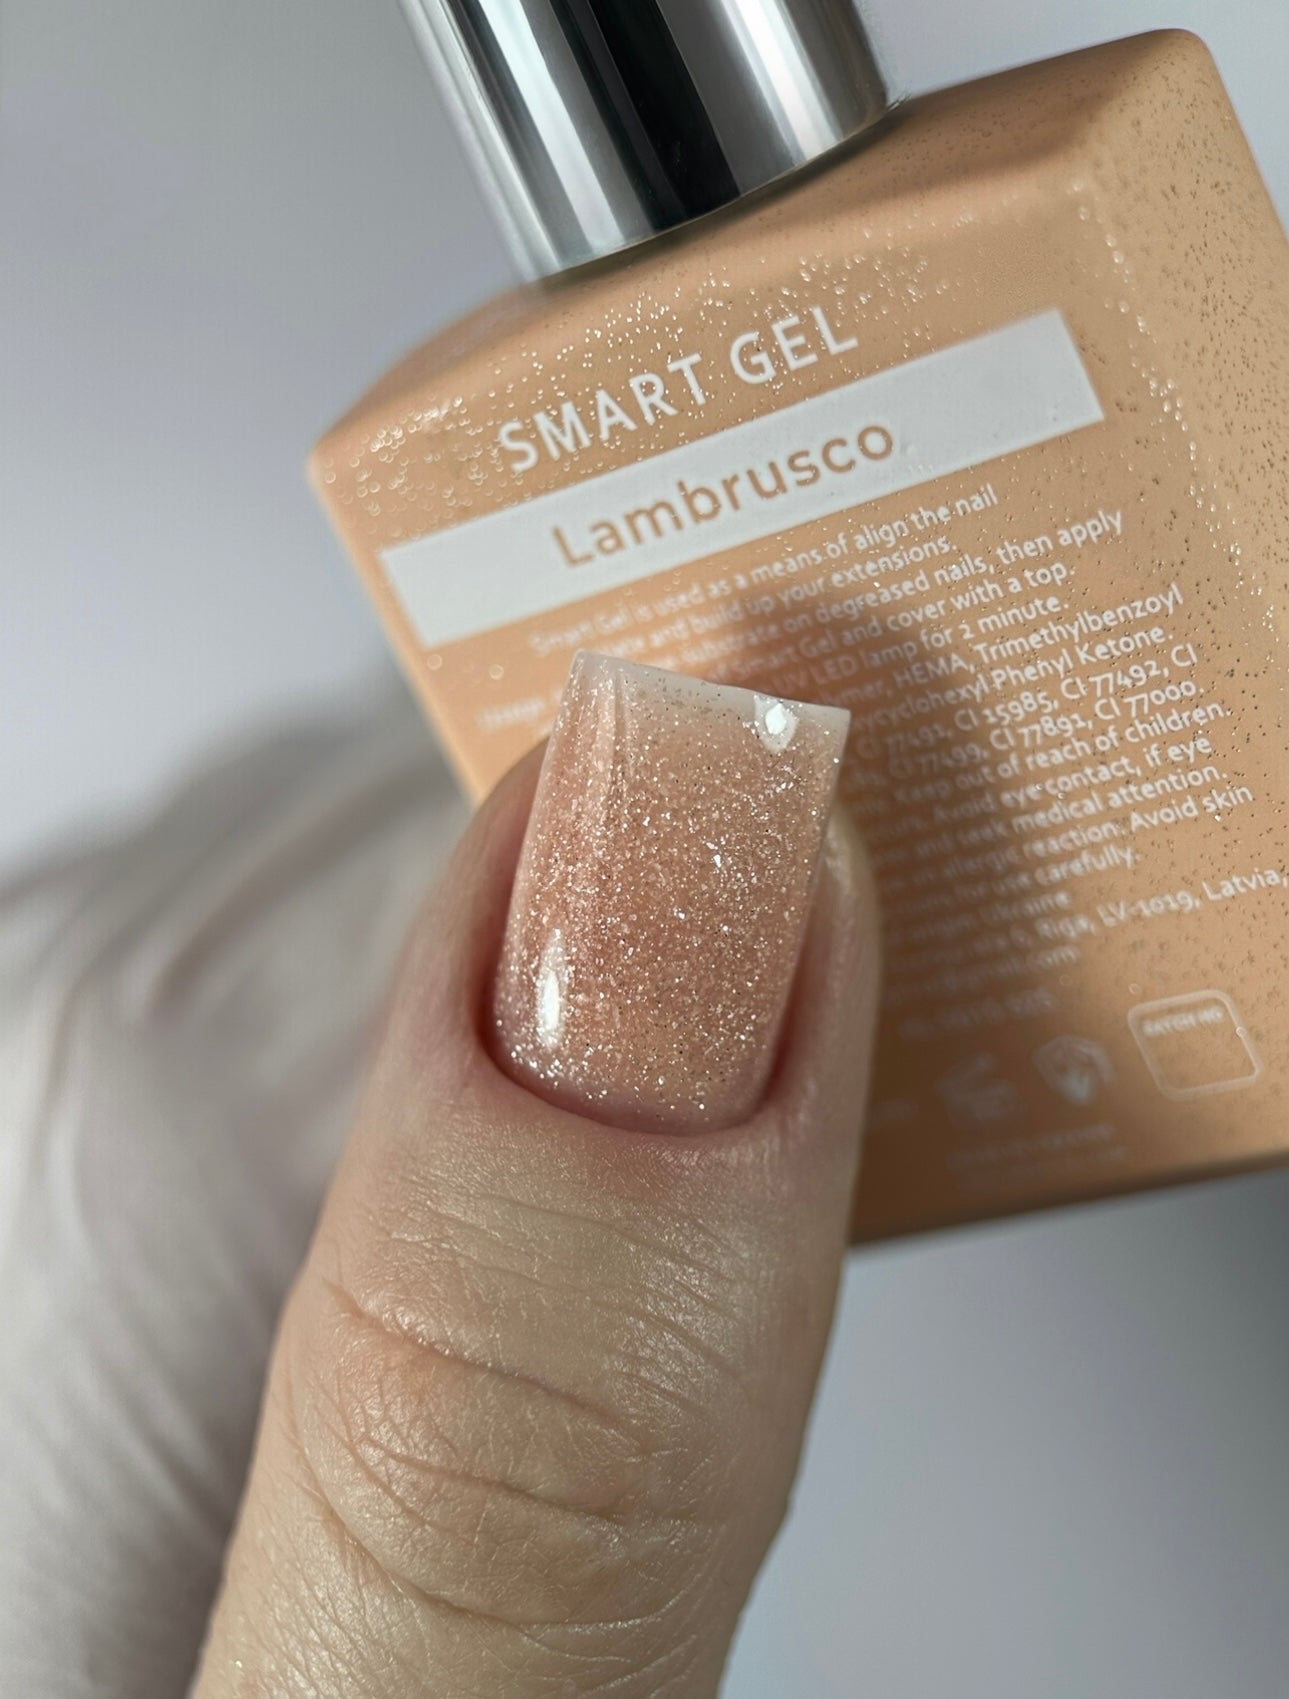 3 New Shimmery Smart gels